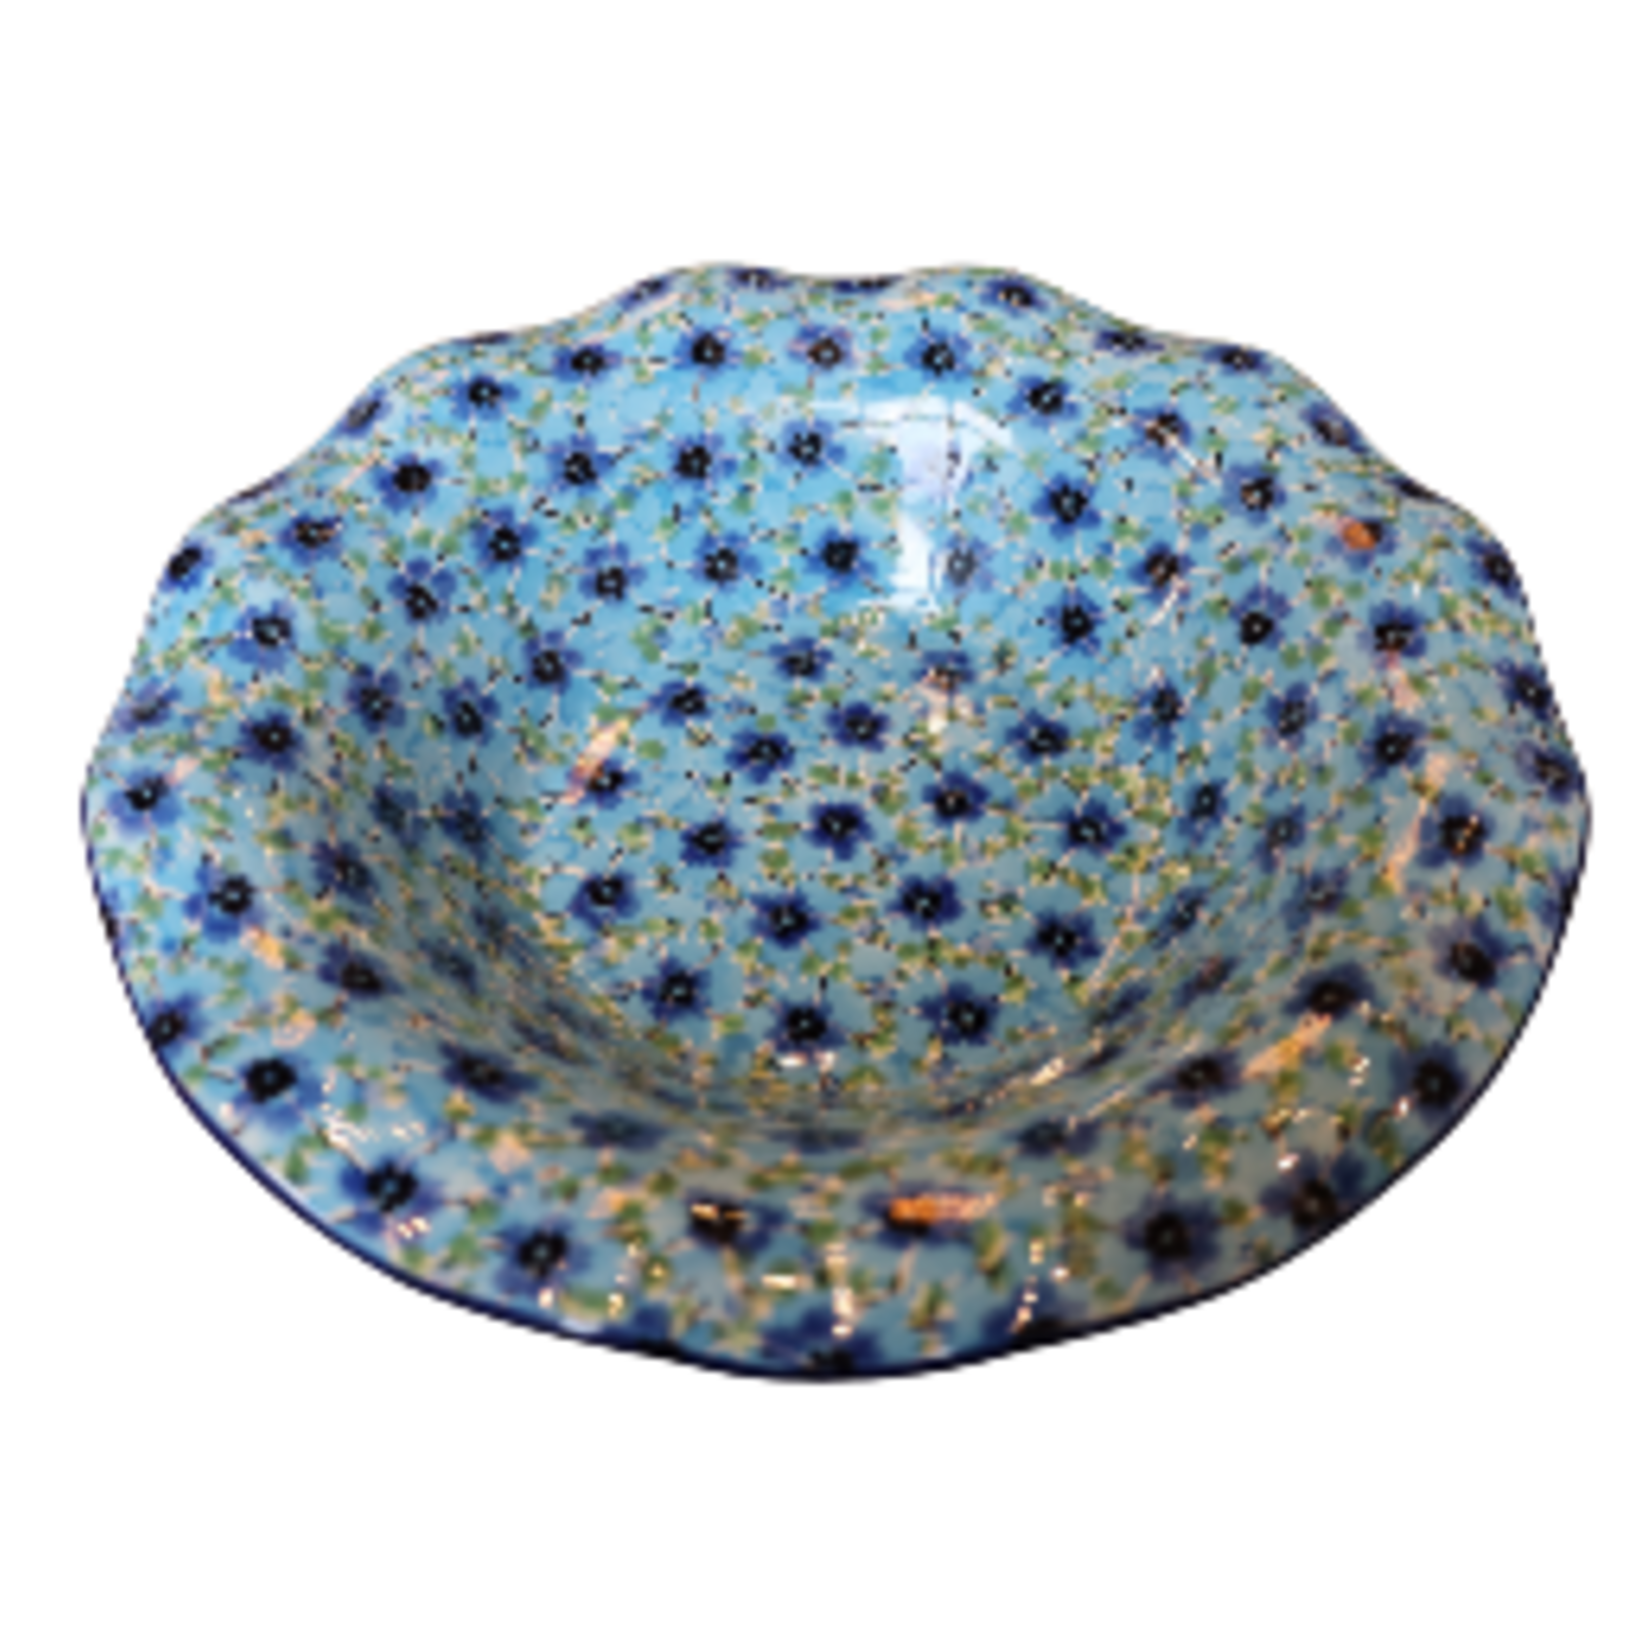 European Design Imports Inc. Polish Pottery Ruffled Edge Bowl UNIKAT, Blue